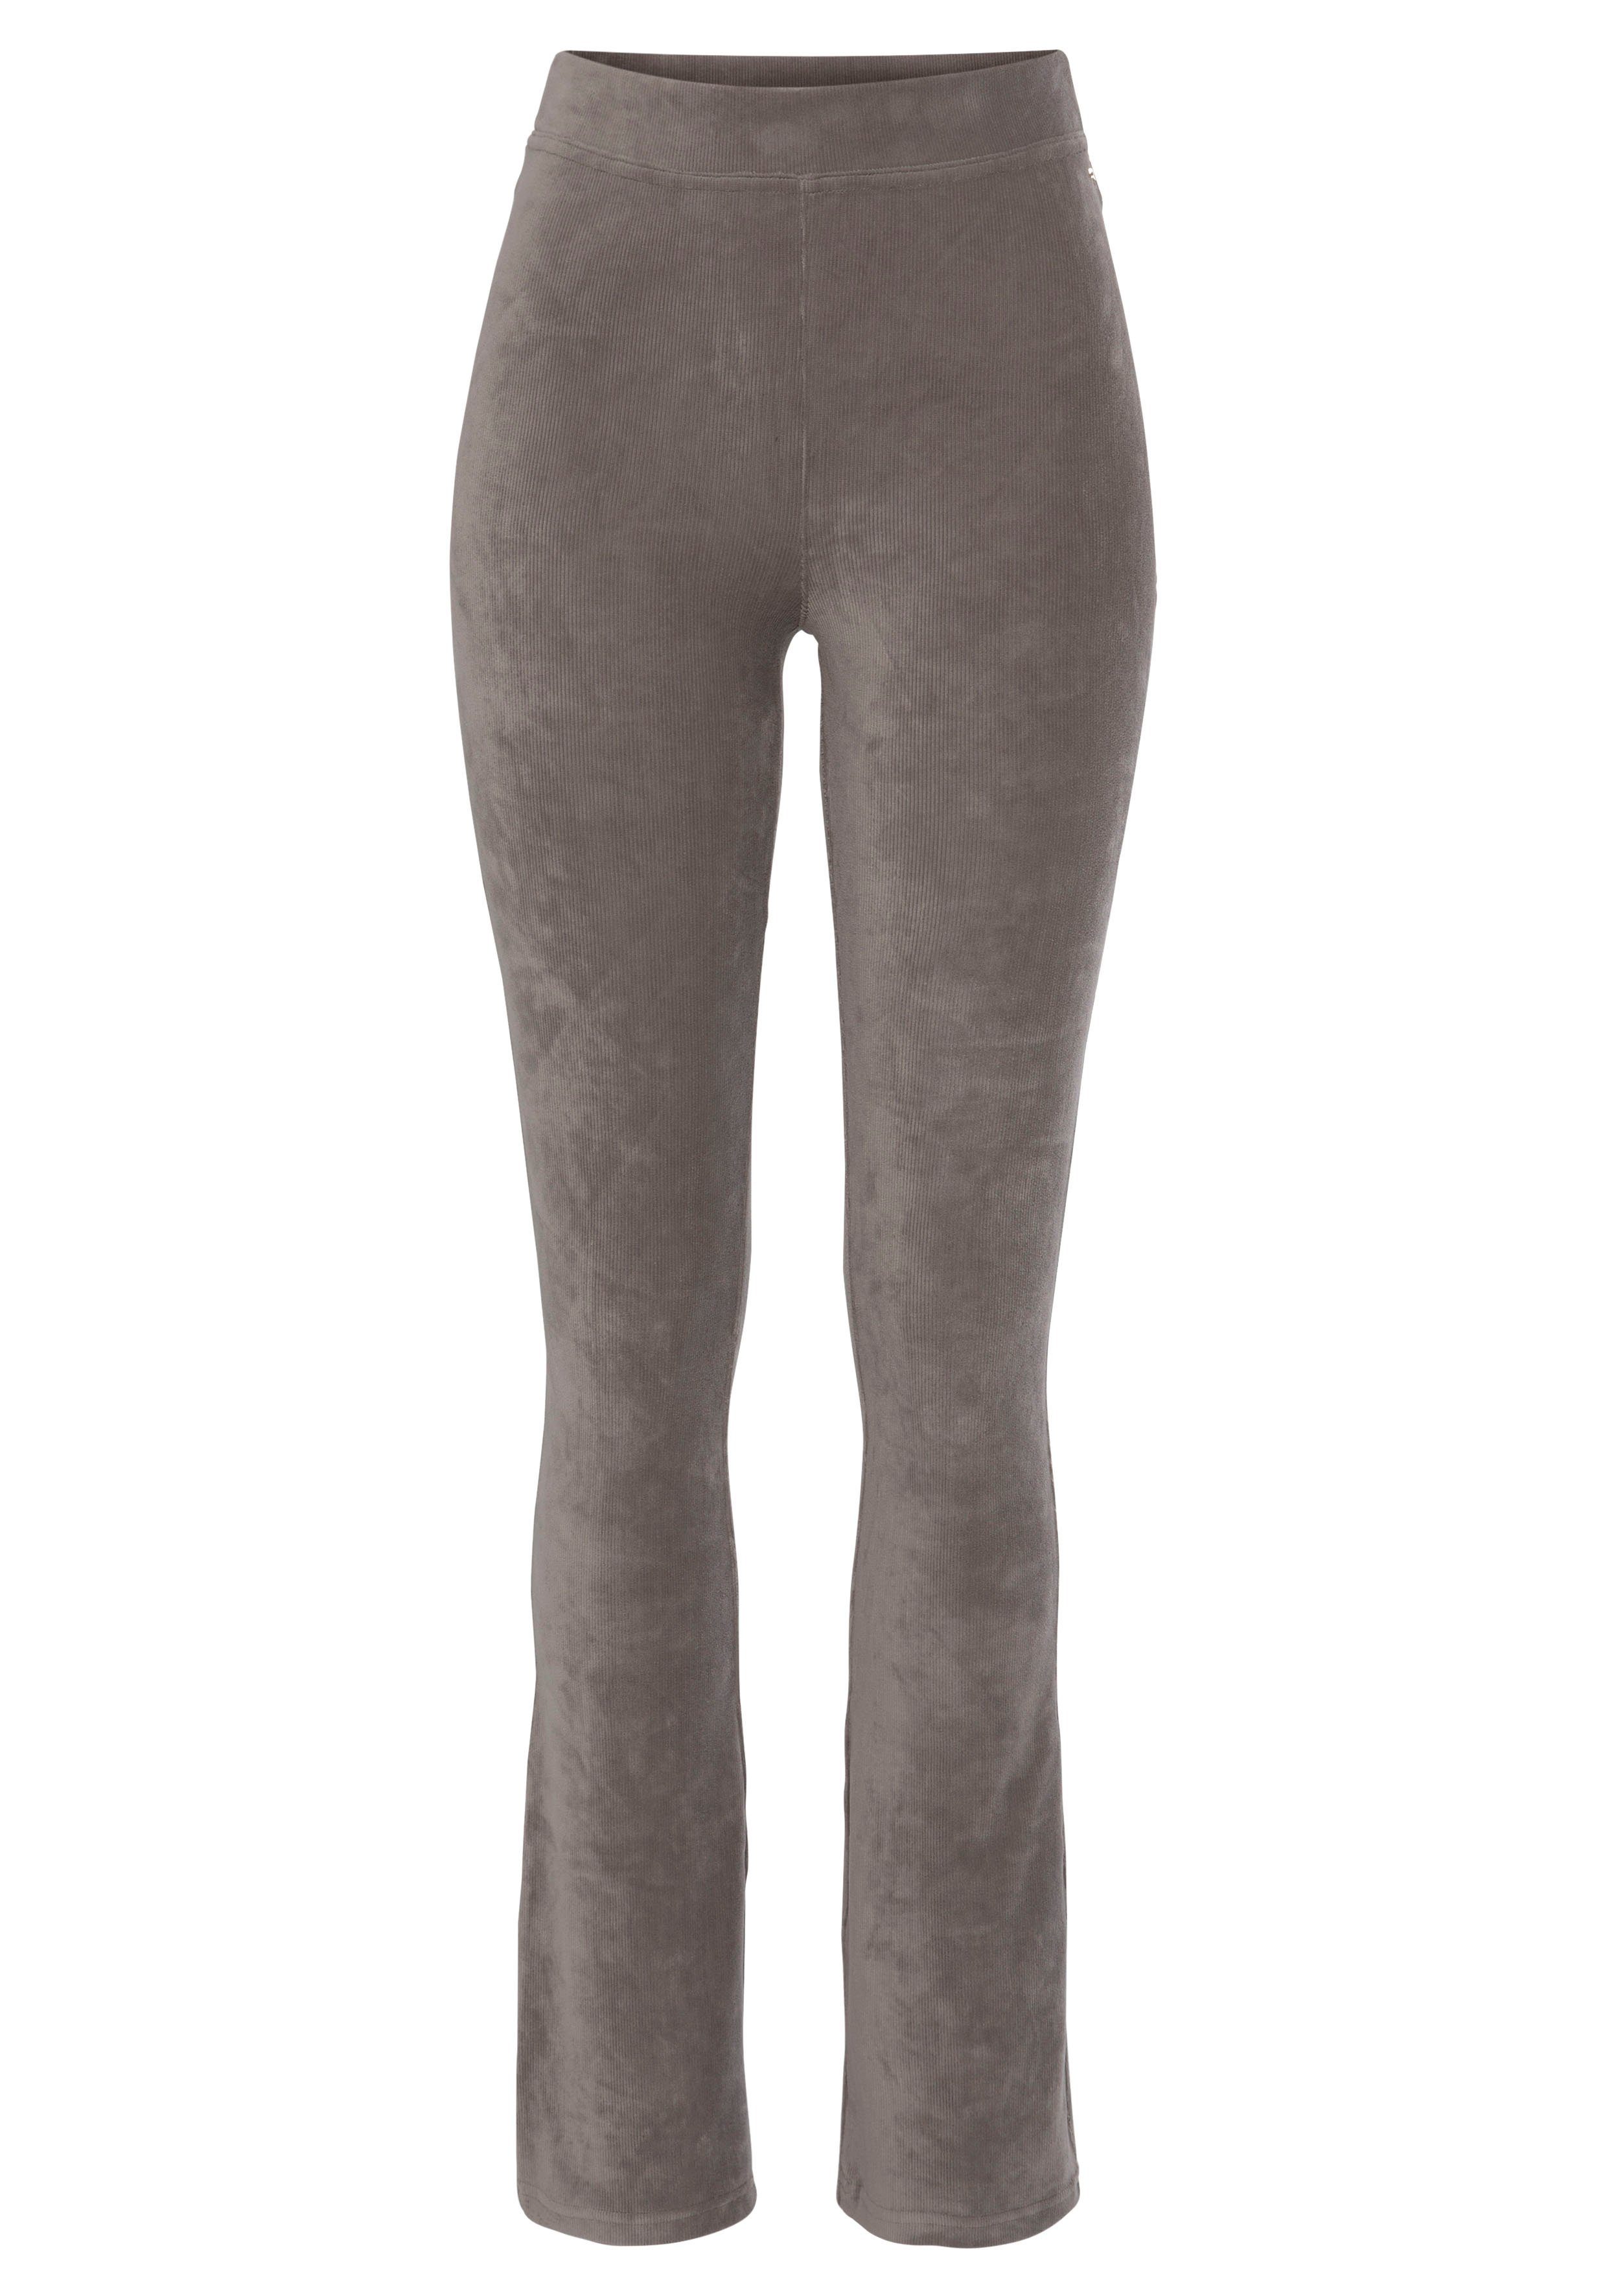 stone weichem Jazzpants in Loungewear Material aus Cord-Optik, LASCANA